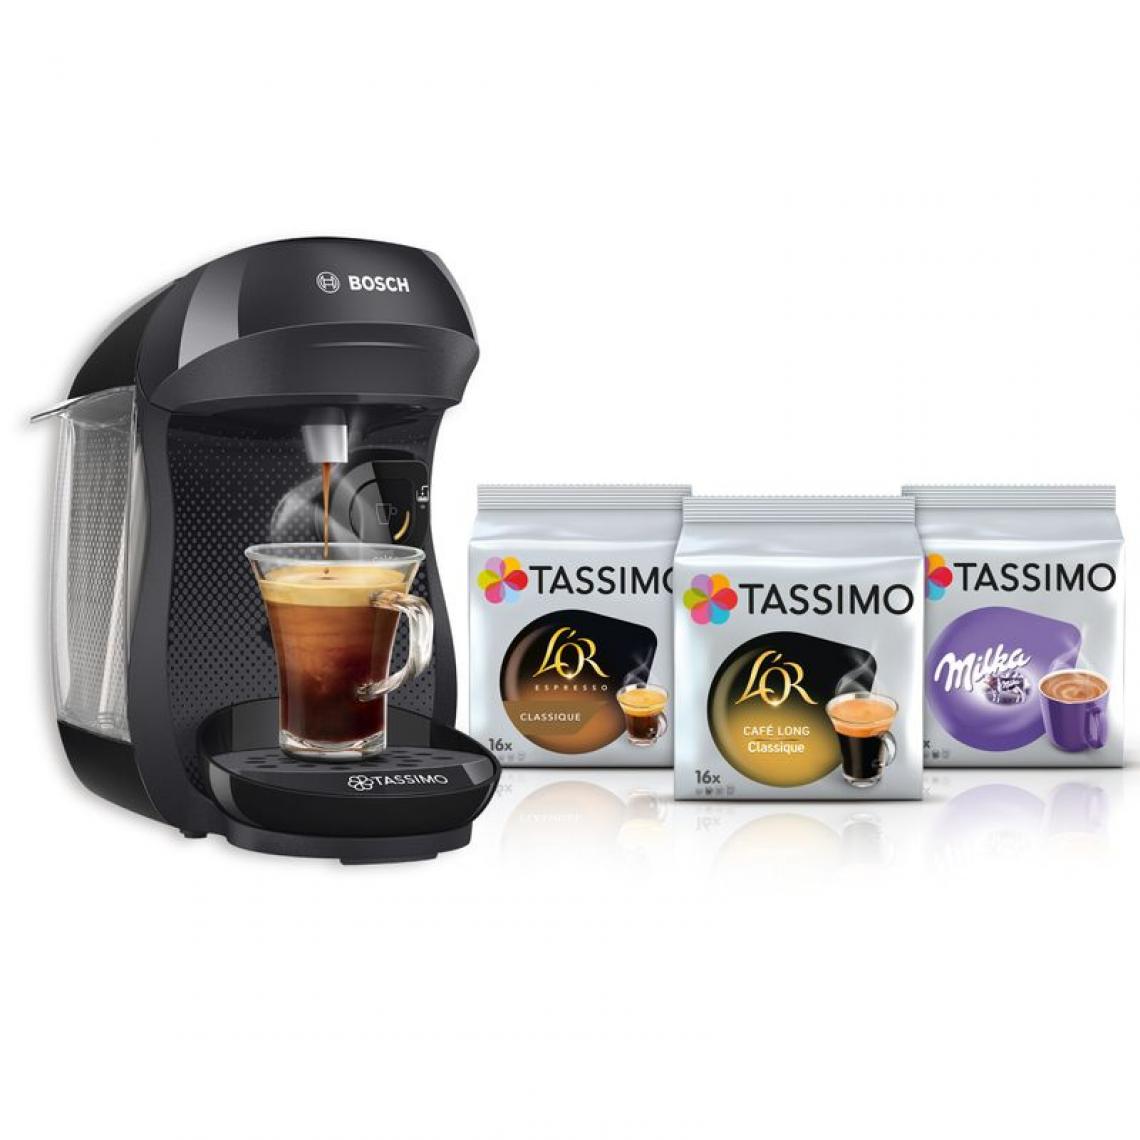 Bosch - Machine à dosettes Tassimo BOSCH TAS1002N6 1400W Noir - Expresso - Cafetière